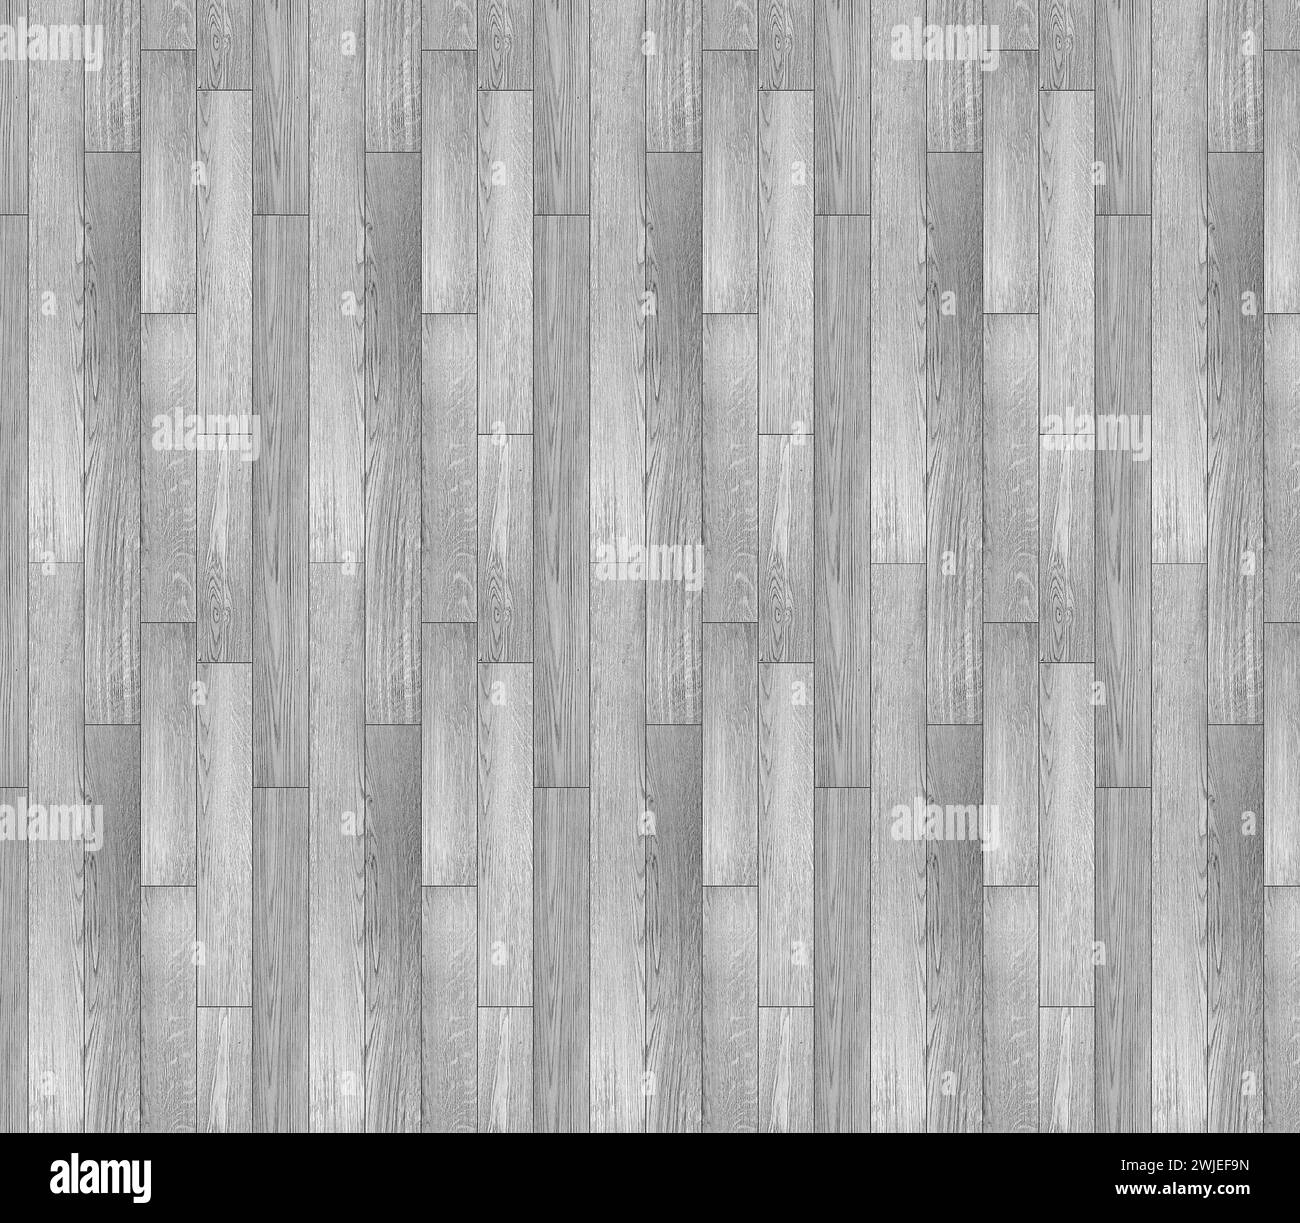 A closeup of a wooden tiled floor texture Stock Photo